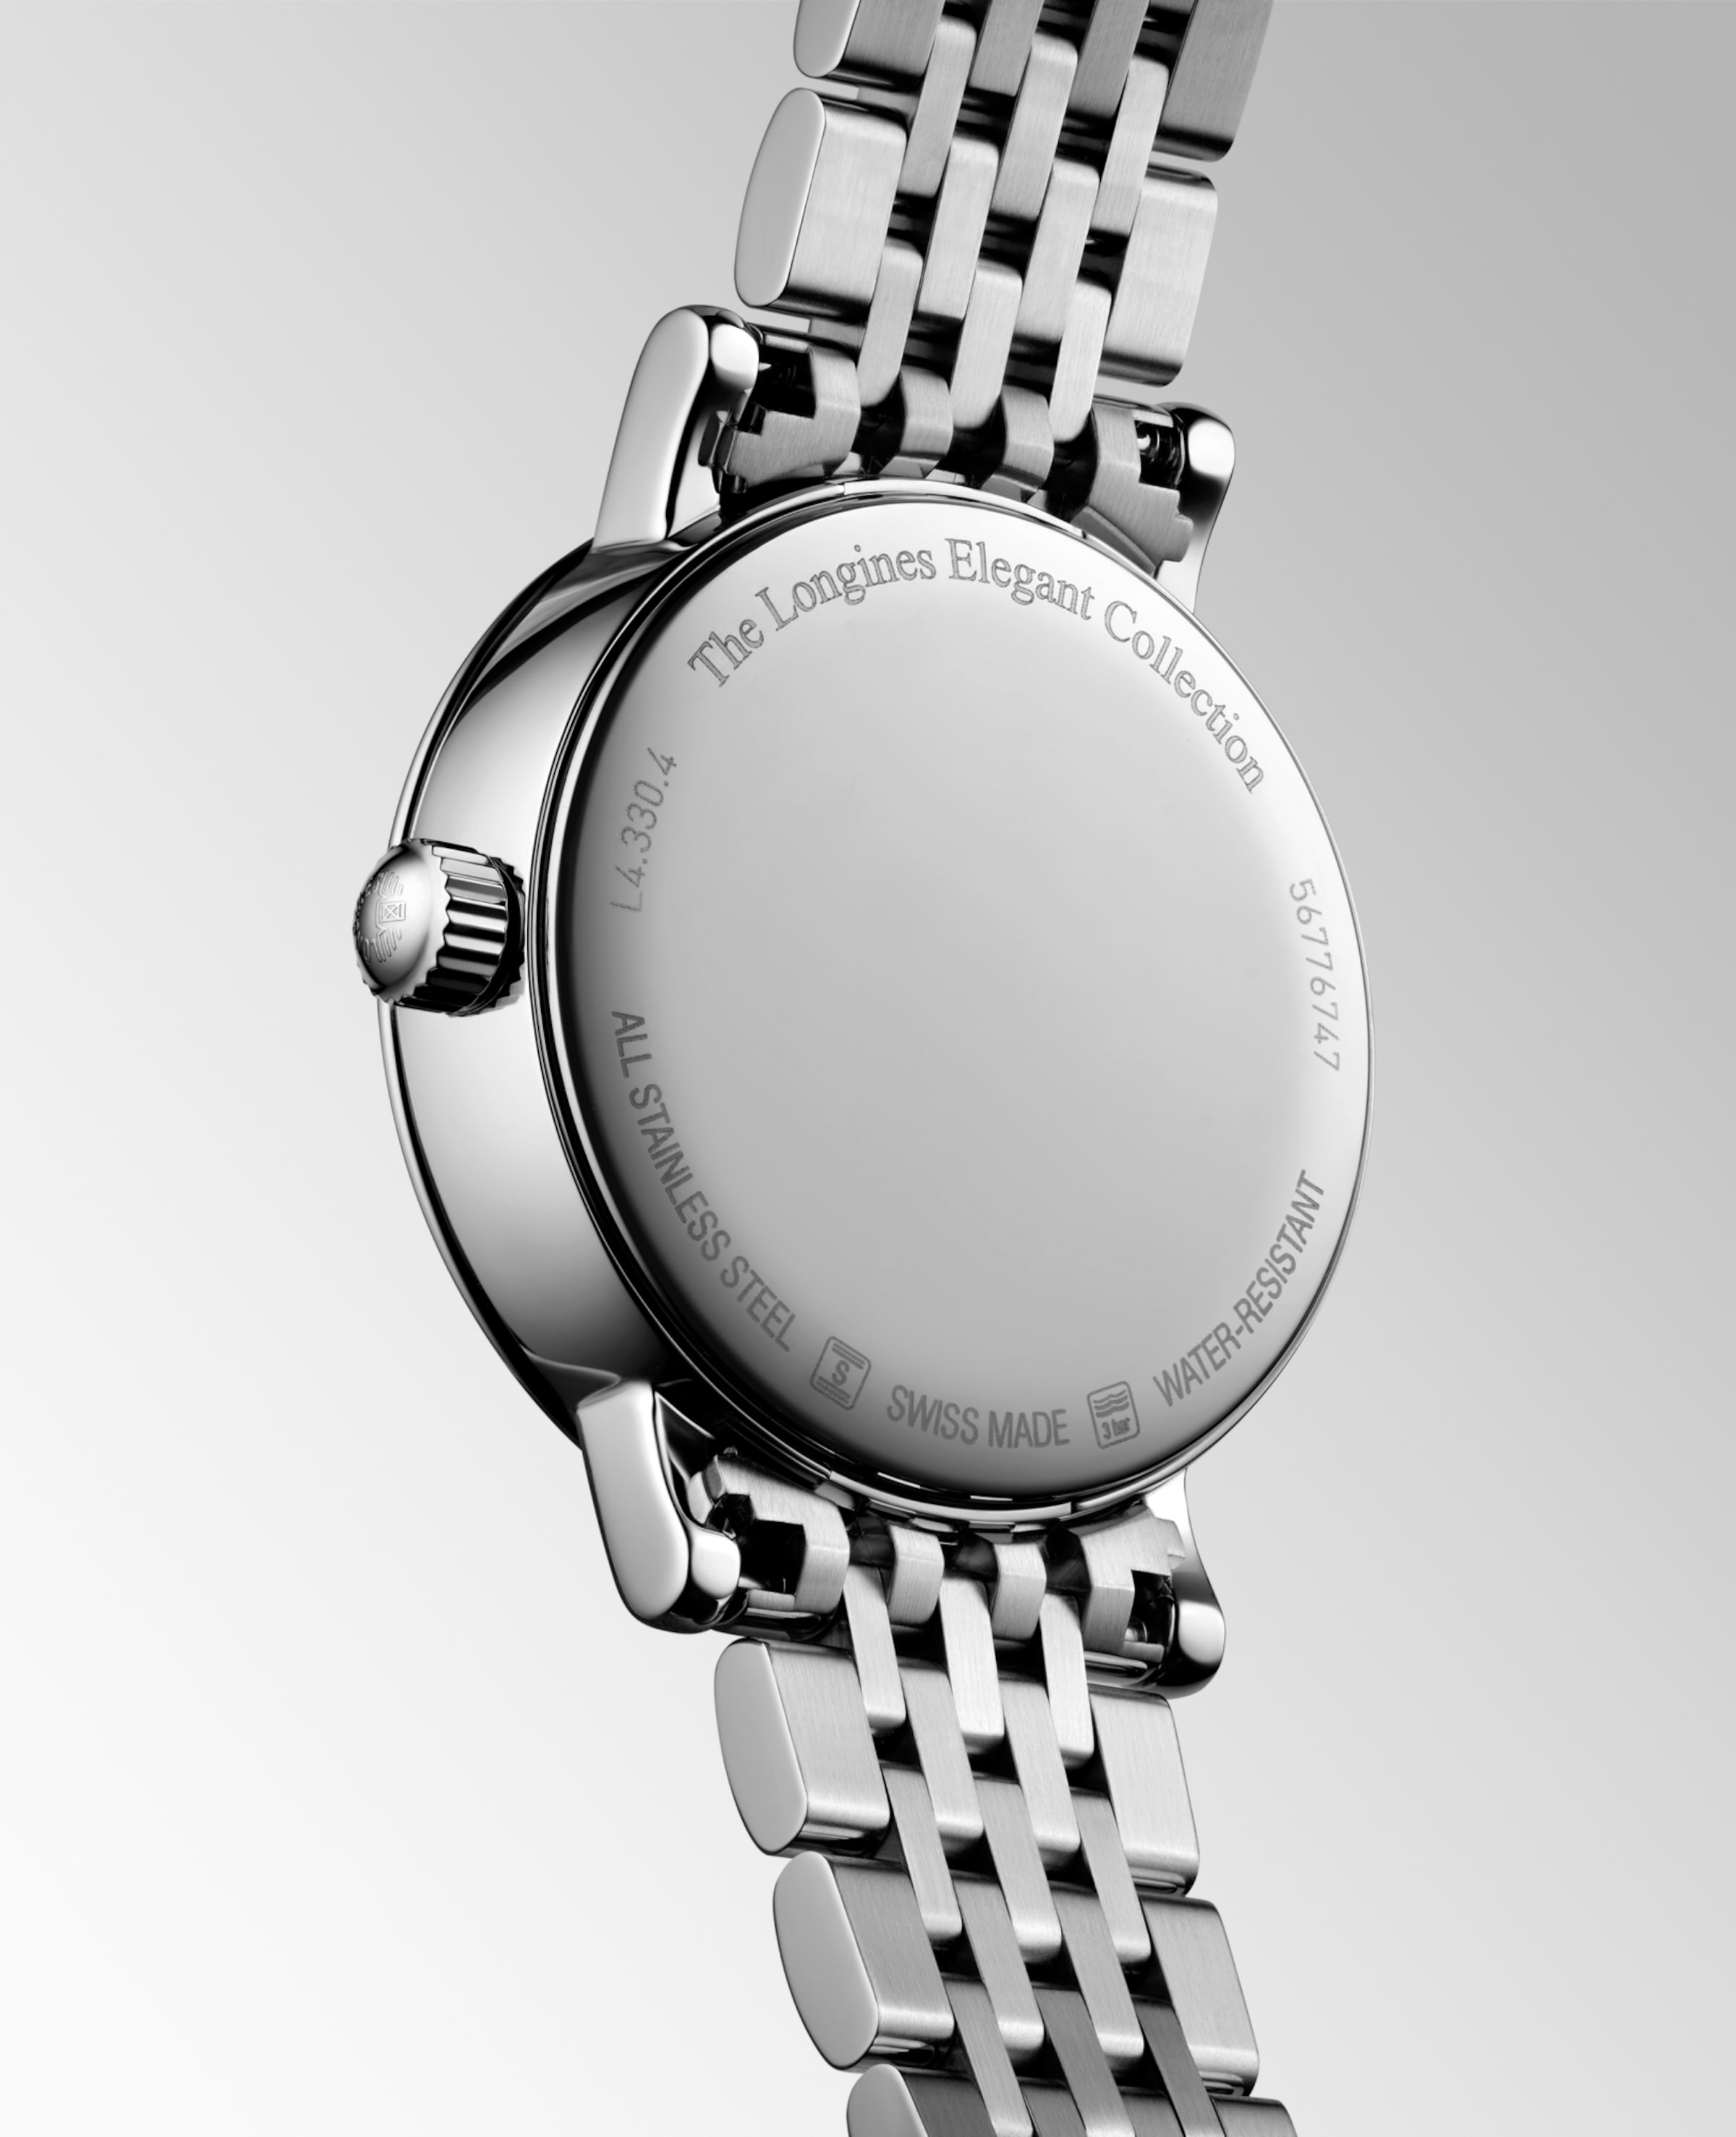 Longines ELEGANT COLLECTION Quartz Stainless steel Watch - L4.330.4.11.6